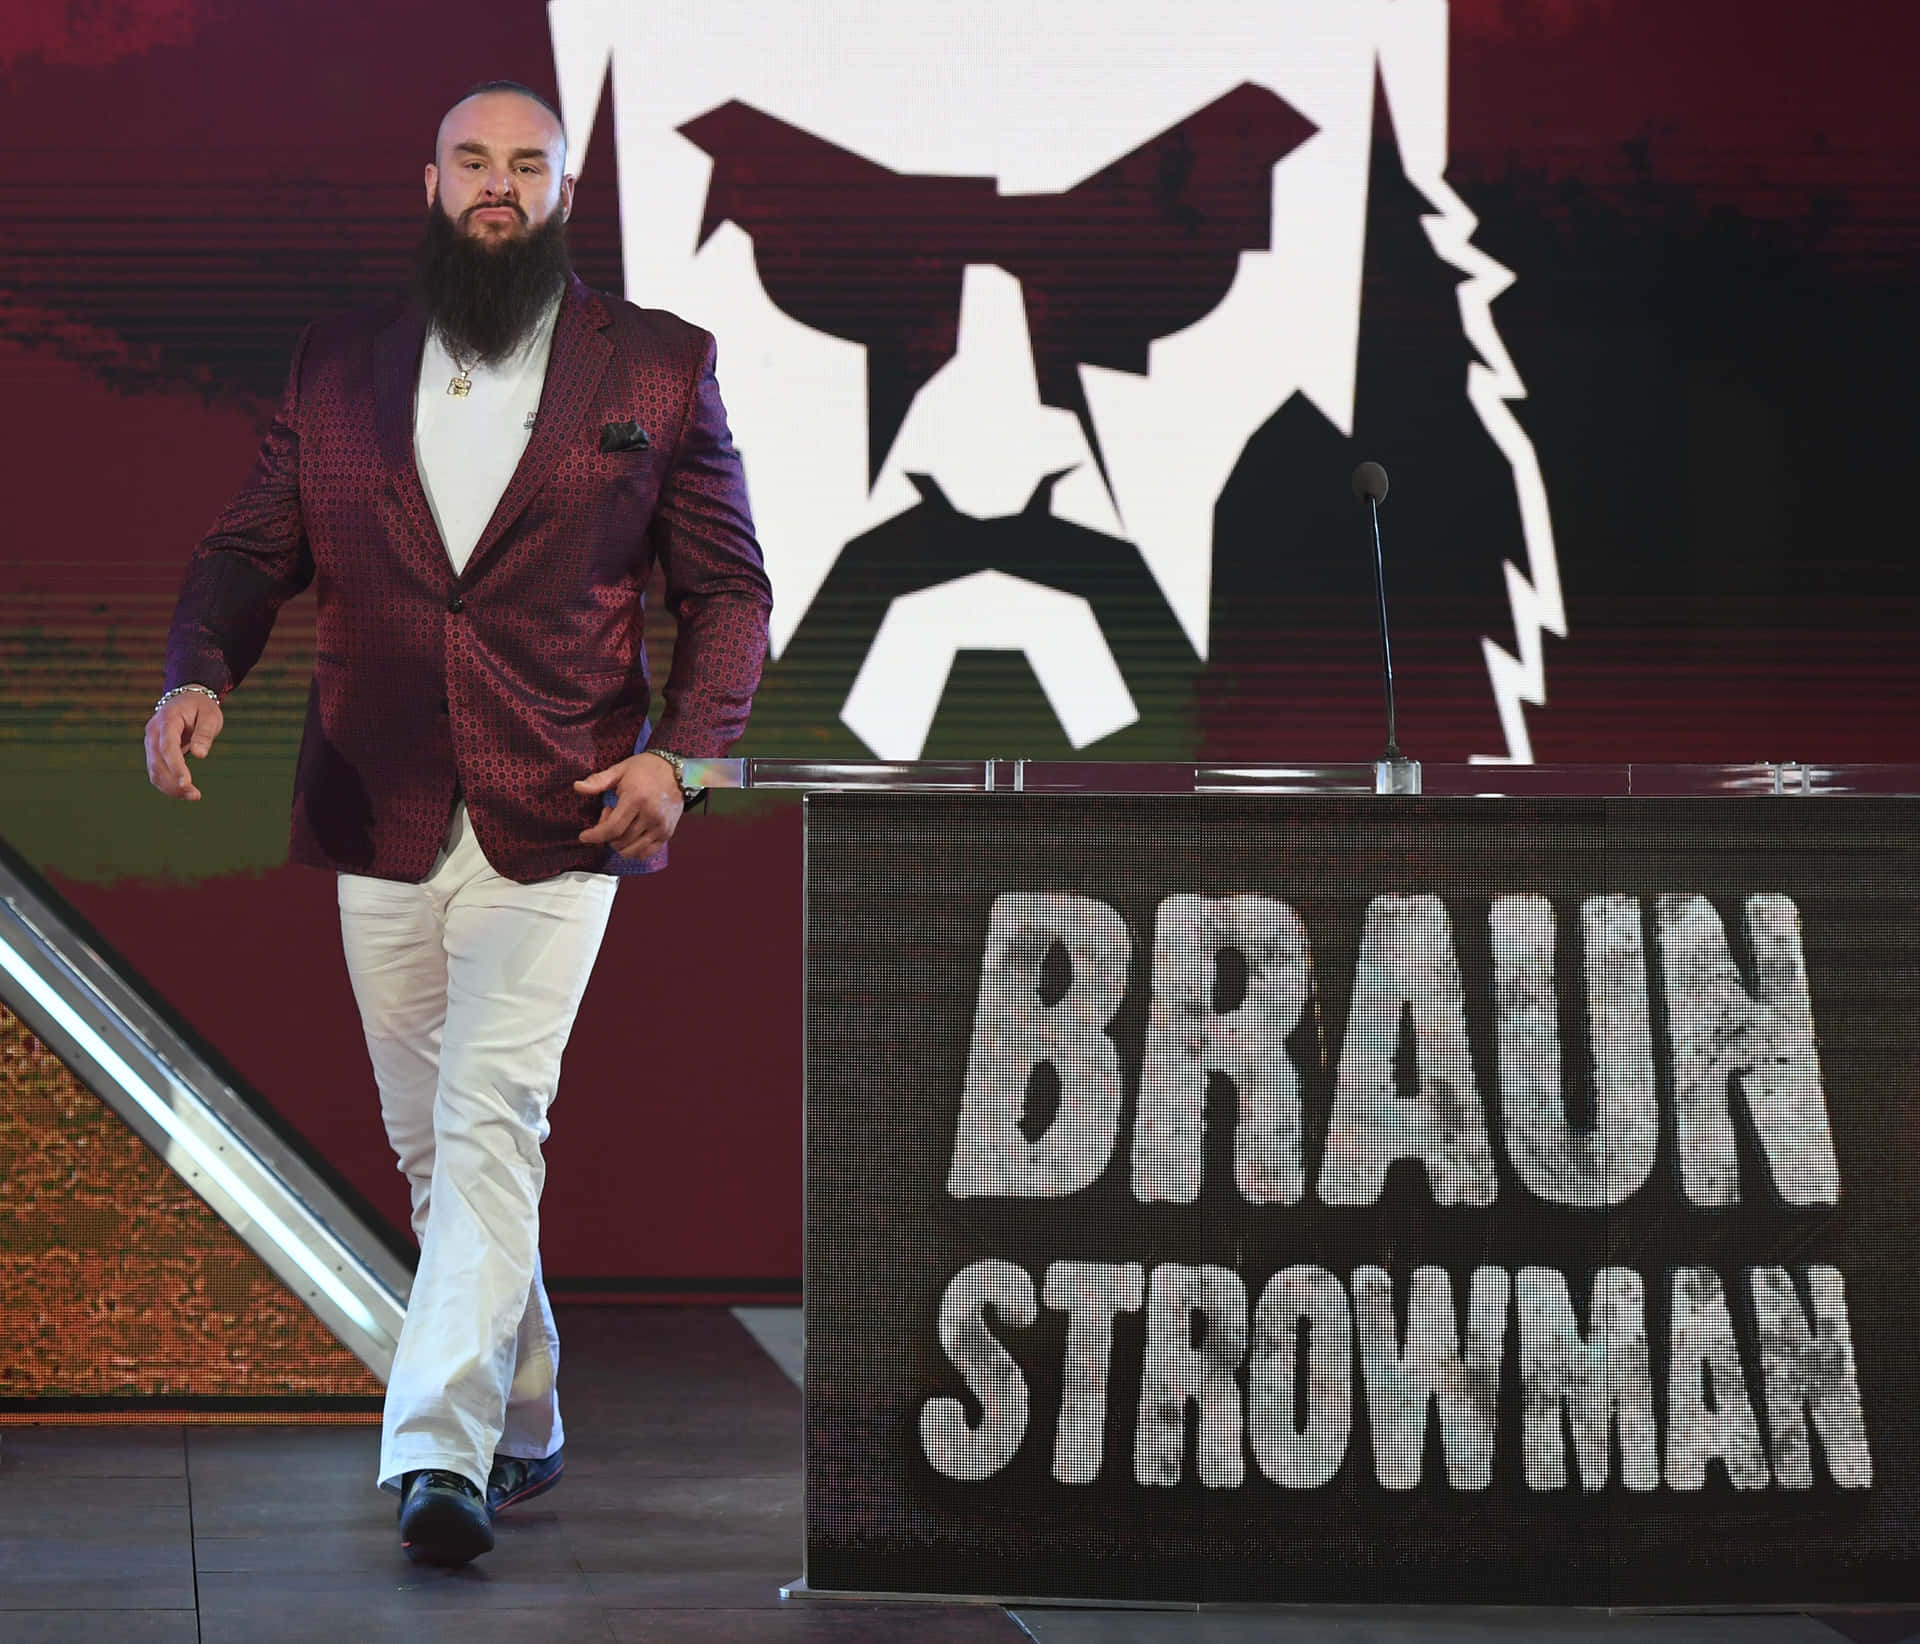 Wwe American Wrestler Braun Strowman At T-mobile Arena Background